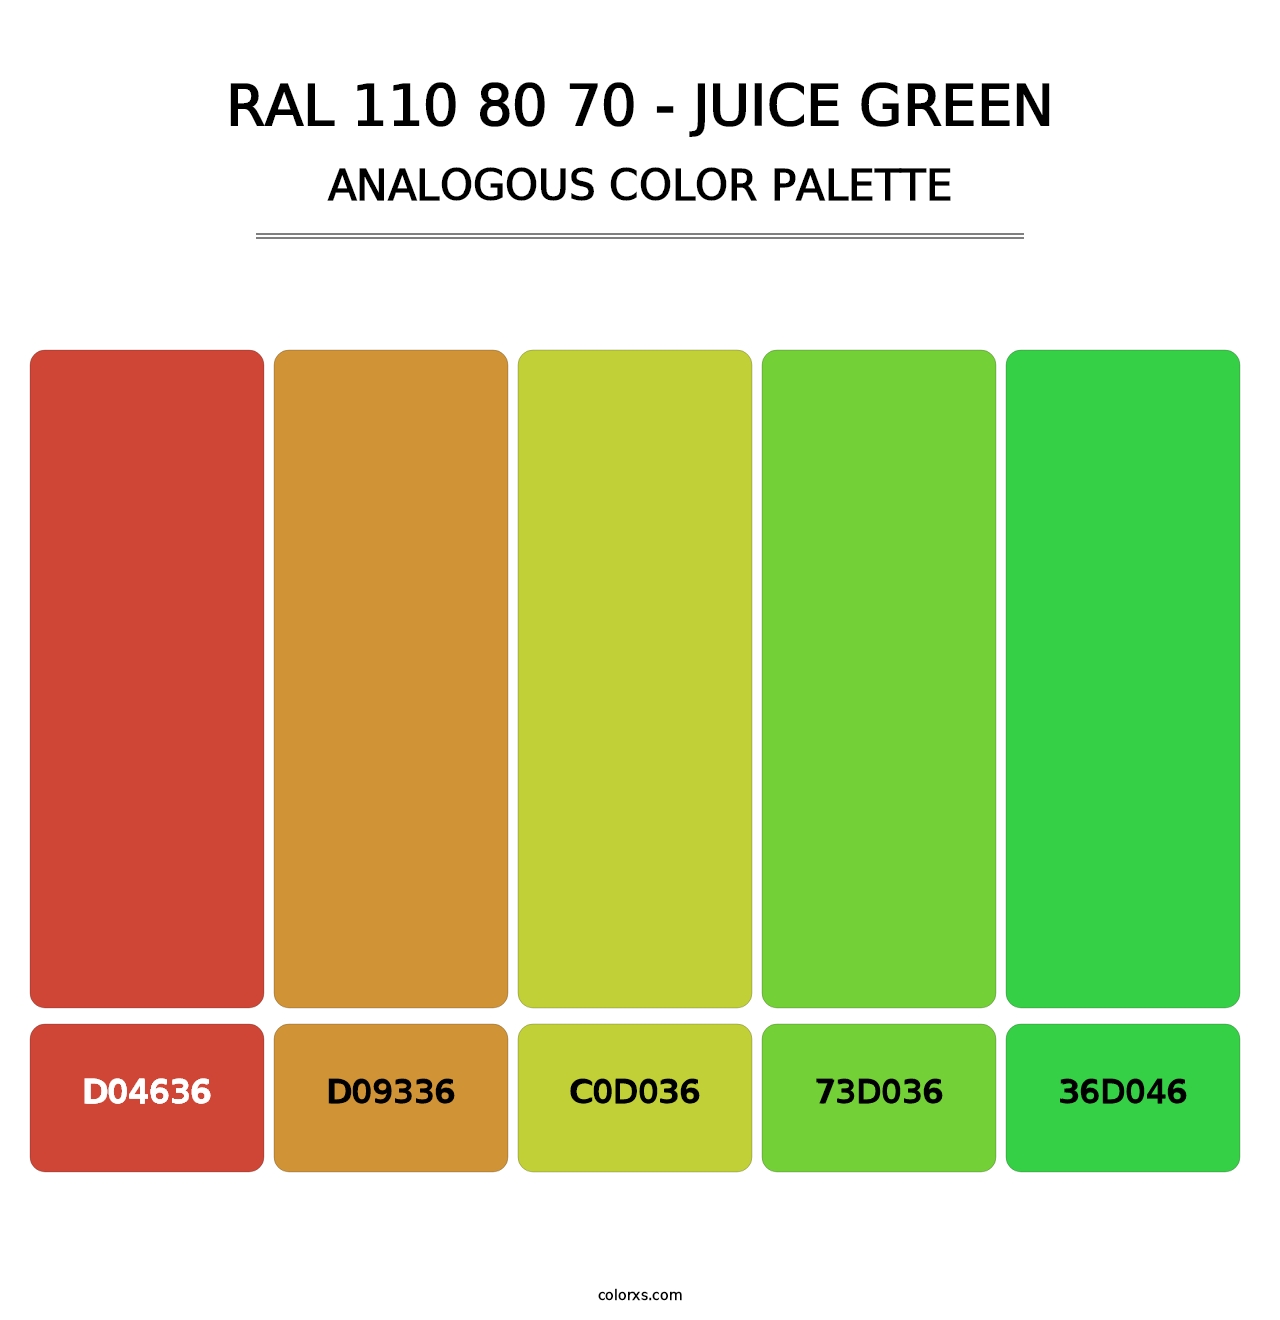 RAL 110 80 70 - Juice Green - Analogous Color Palette